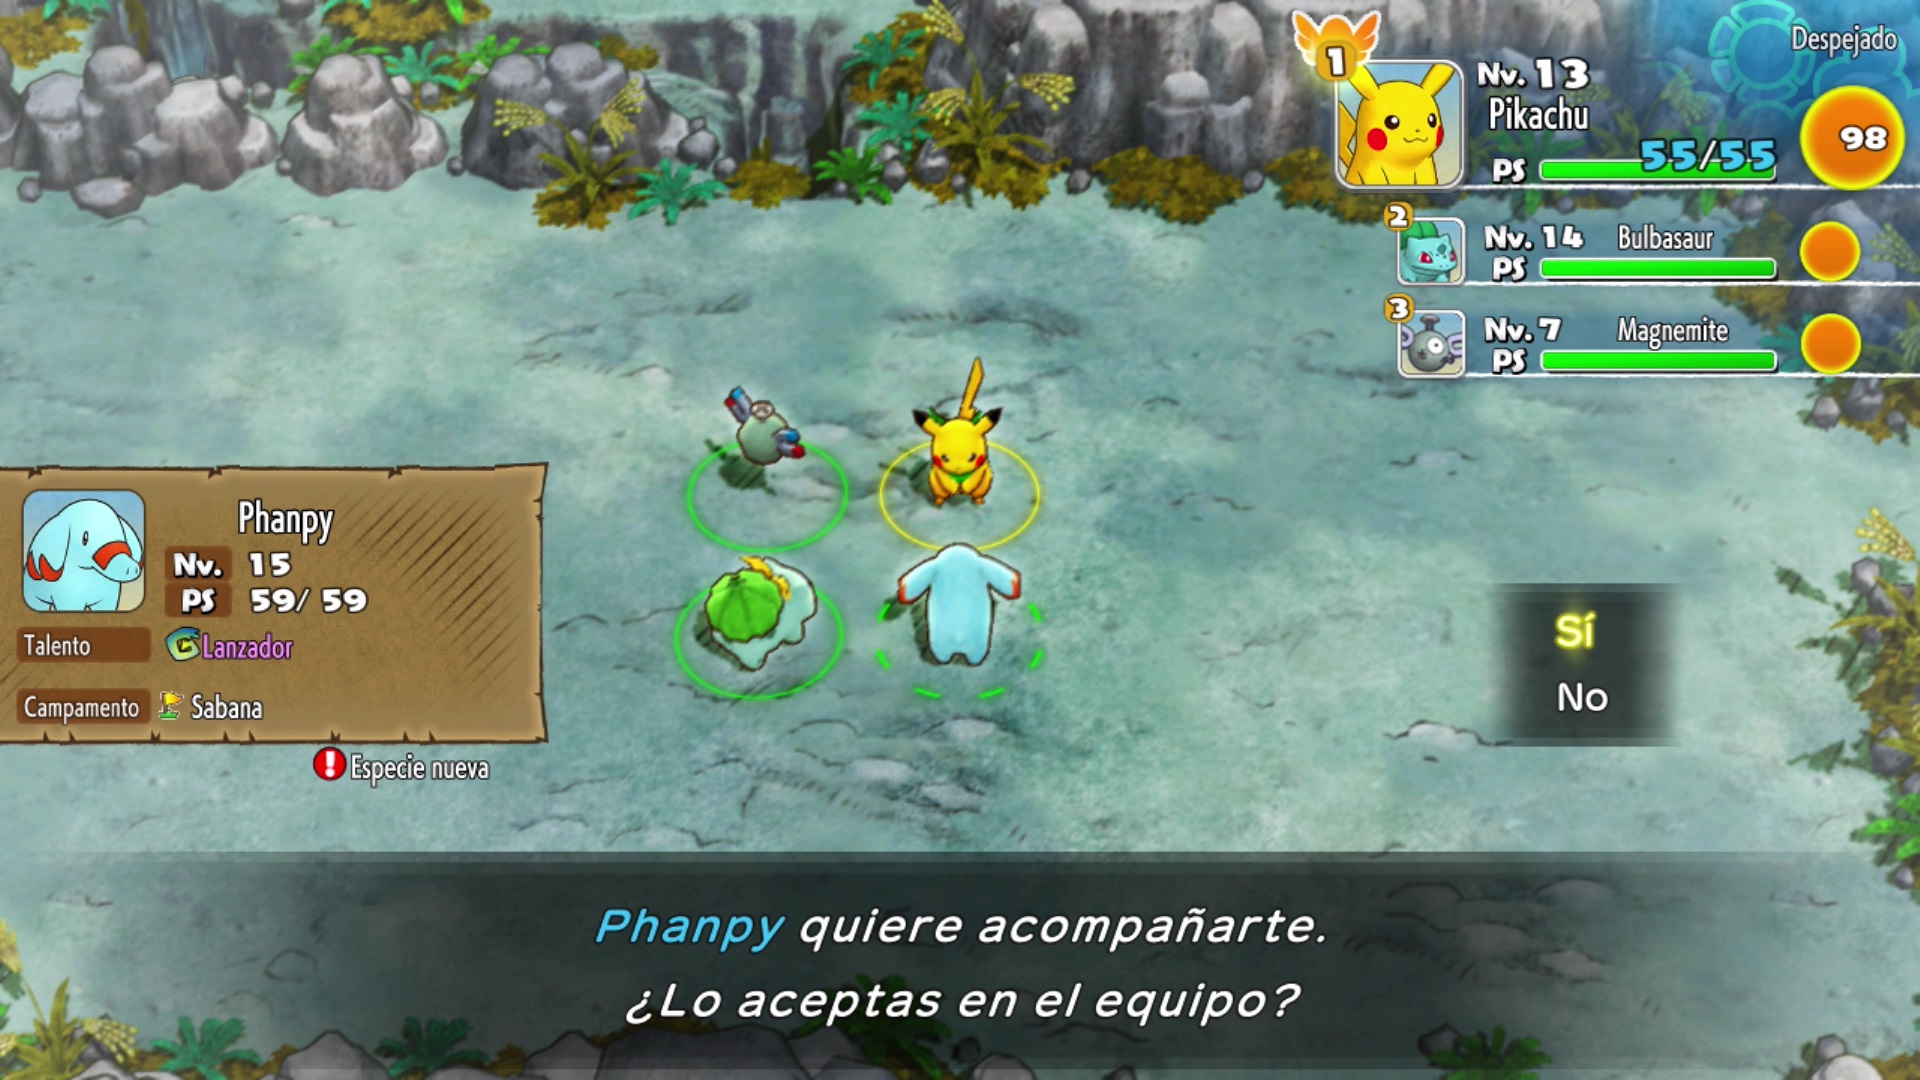 Nintendo Switch Pokemon Mundo Misterioso Equipo De Rescate DX